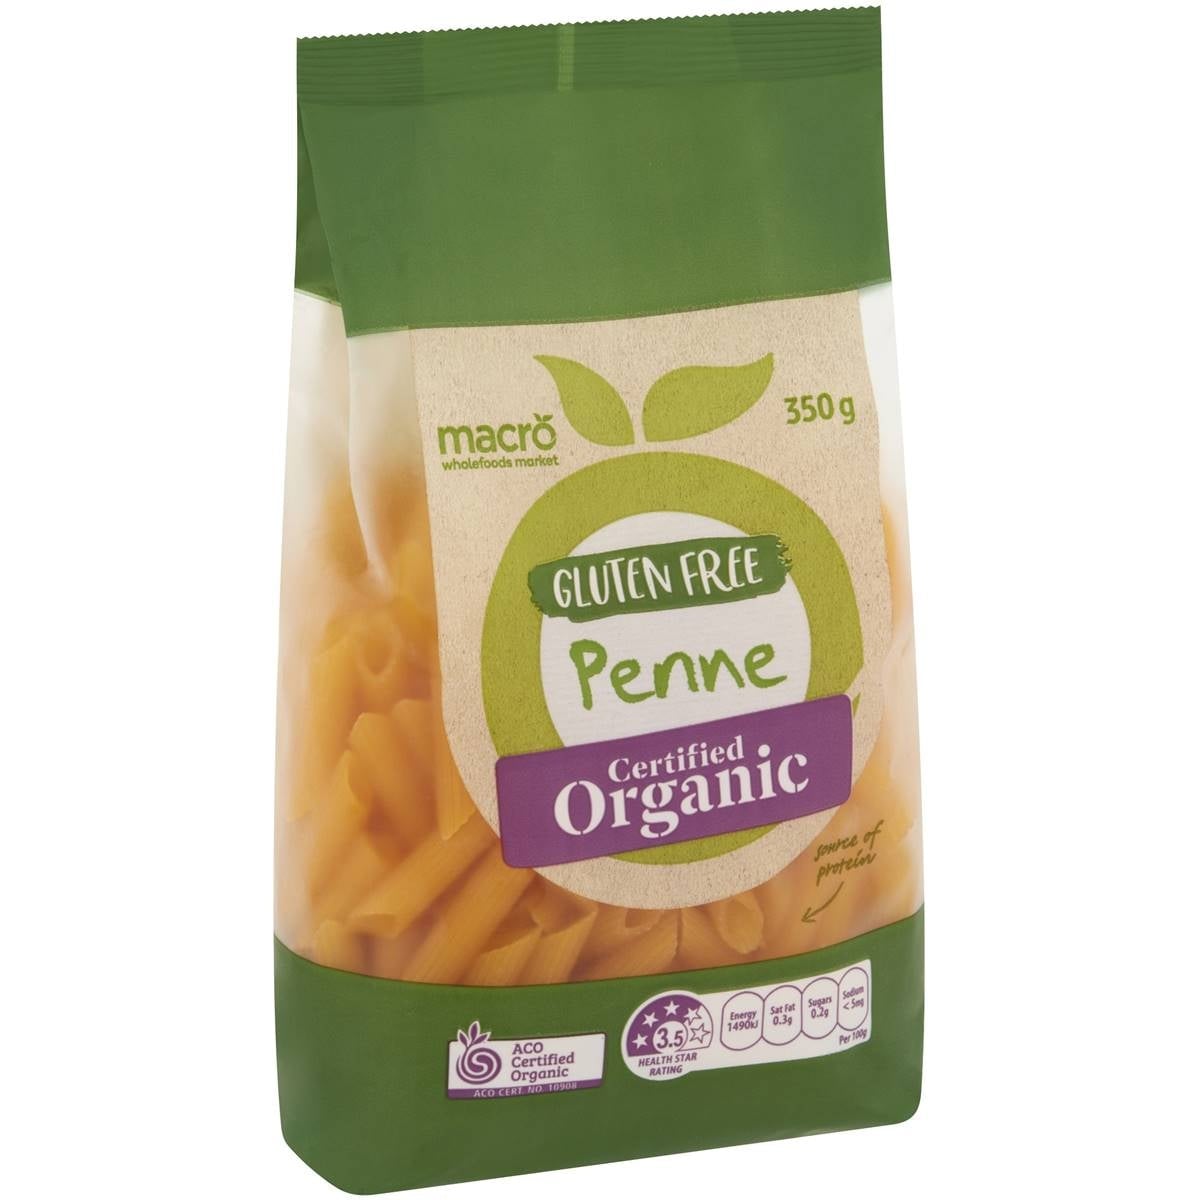 Macro Organic Gluten Free Penne 350g